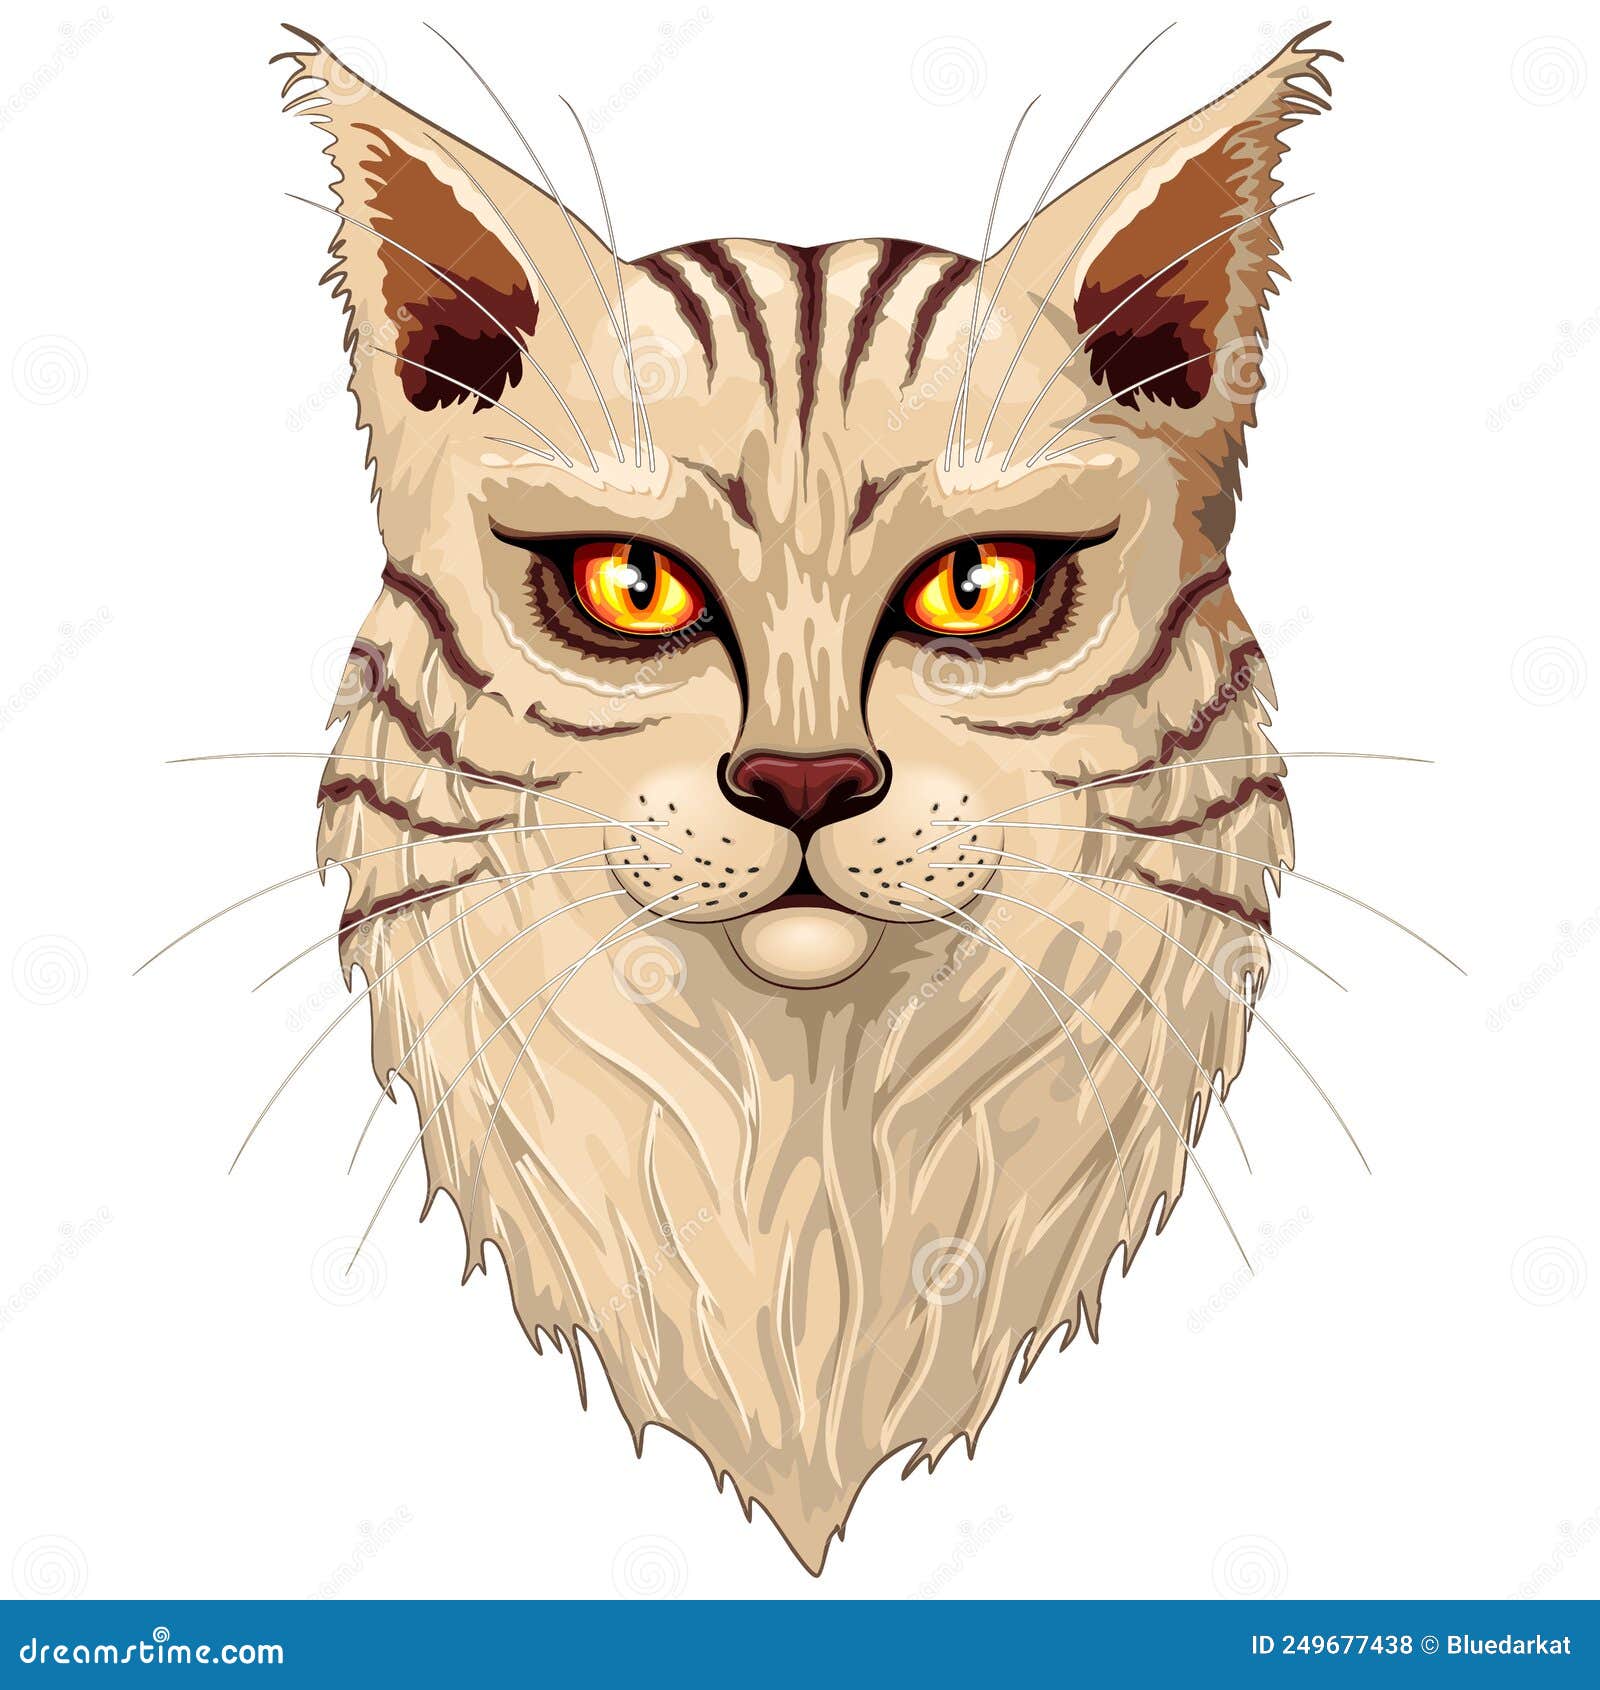 cat main coon portrait with big orange eyes  graphic art   on white.